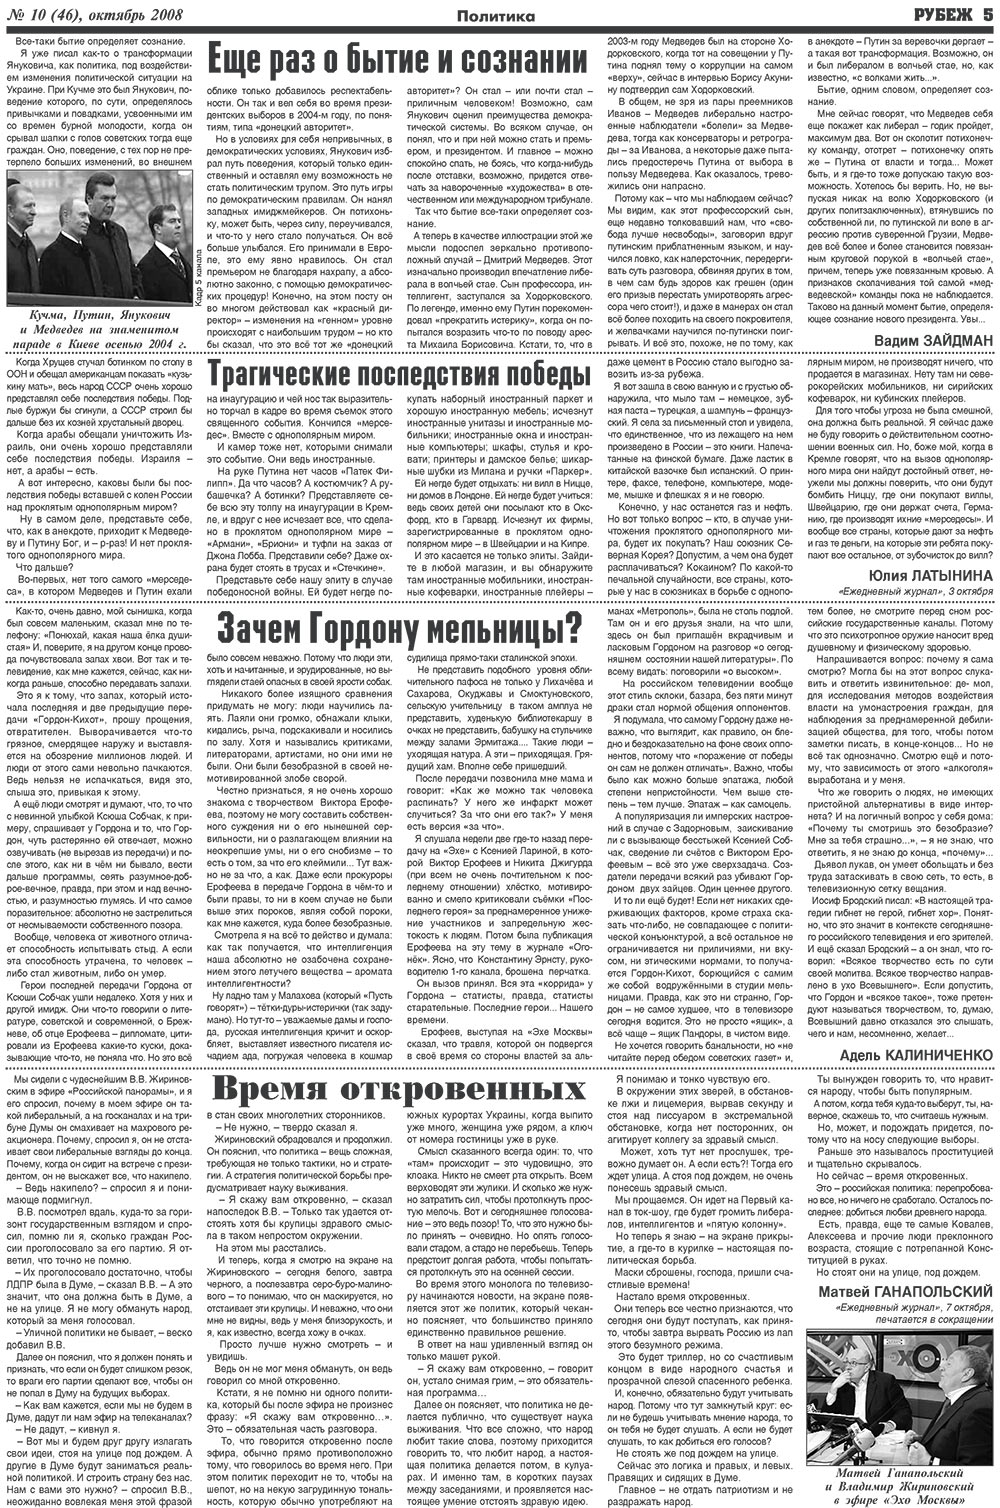 Рубеж, газета. 2008 №10 стр.5